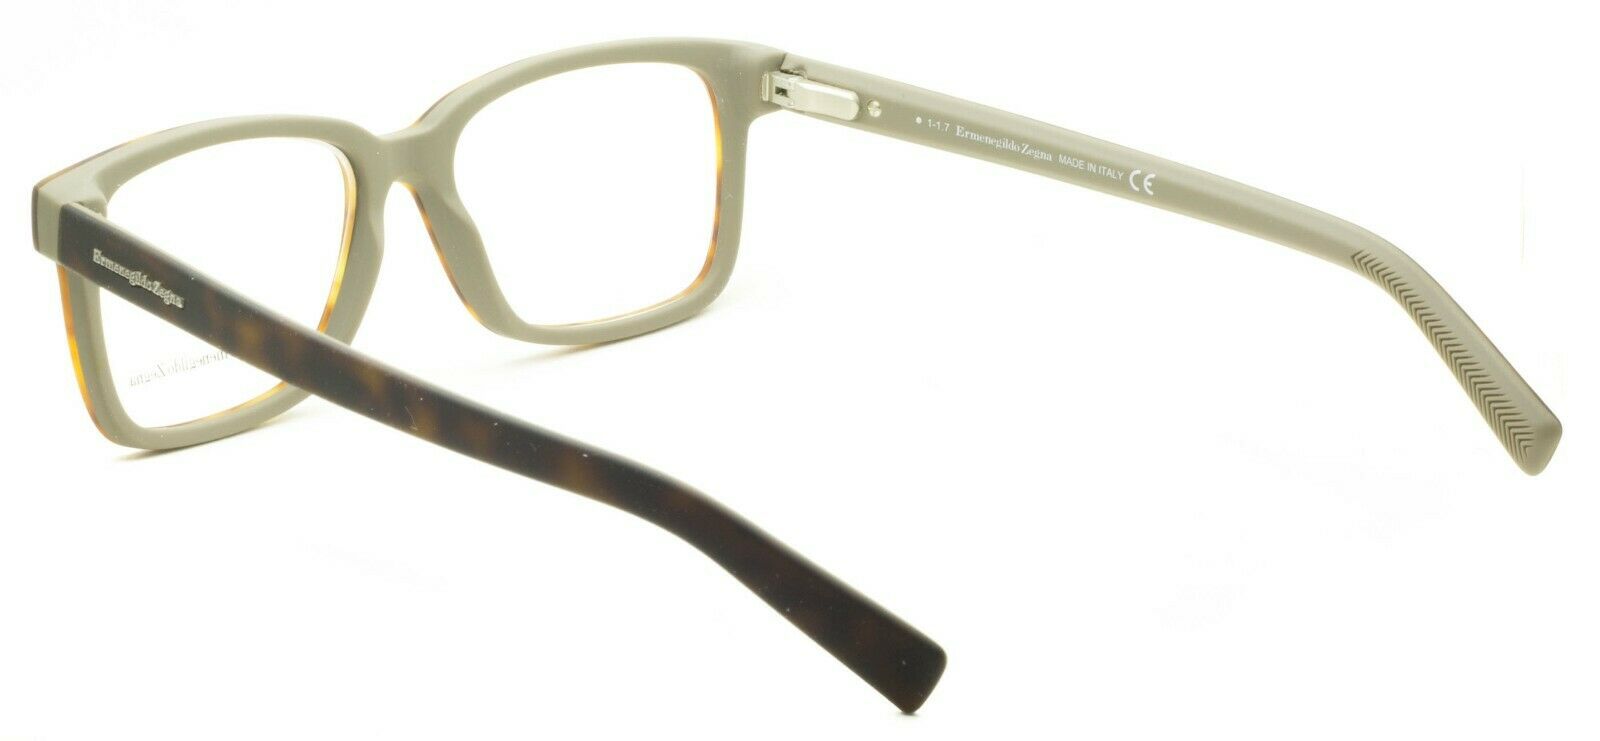 ERMENEGILDO ZEGNA EZ 5105 B56 53mm FRAMES Glasses Eyewear RX Optical New - Italy